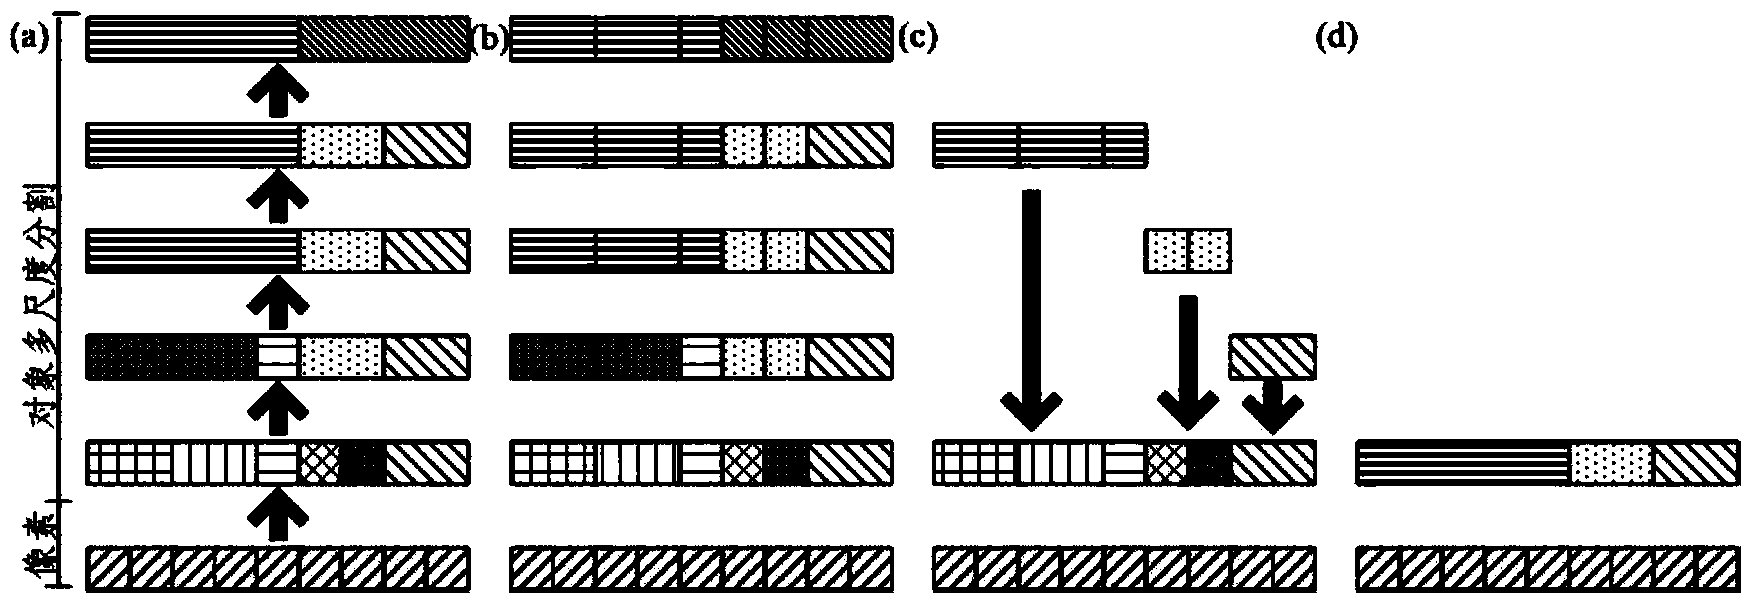 Multi-scale superposition segmentation method